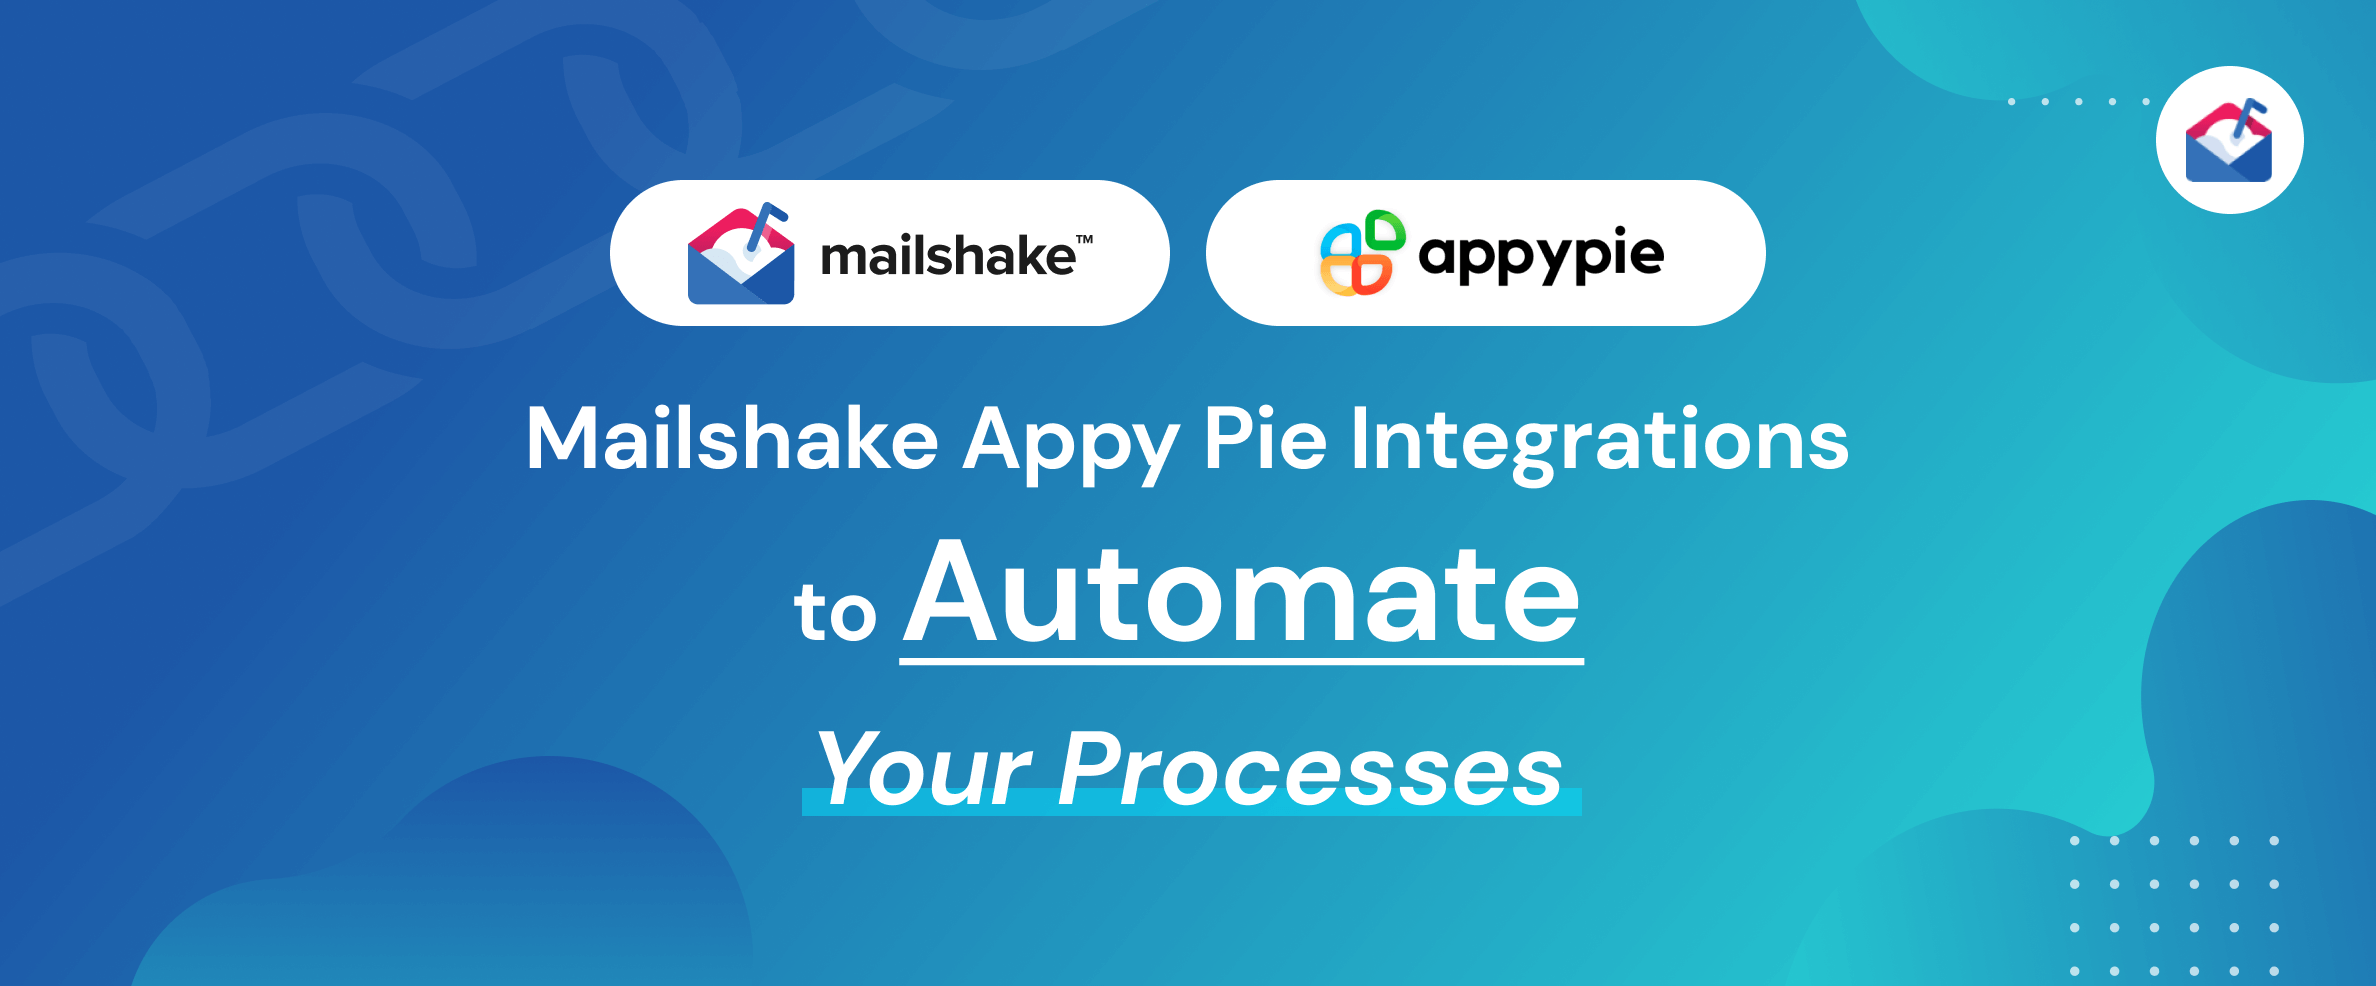 Appy Pie Integrations